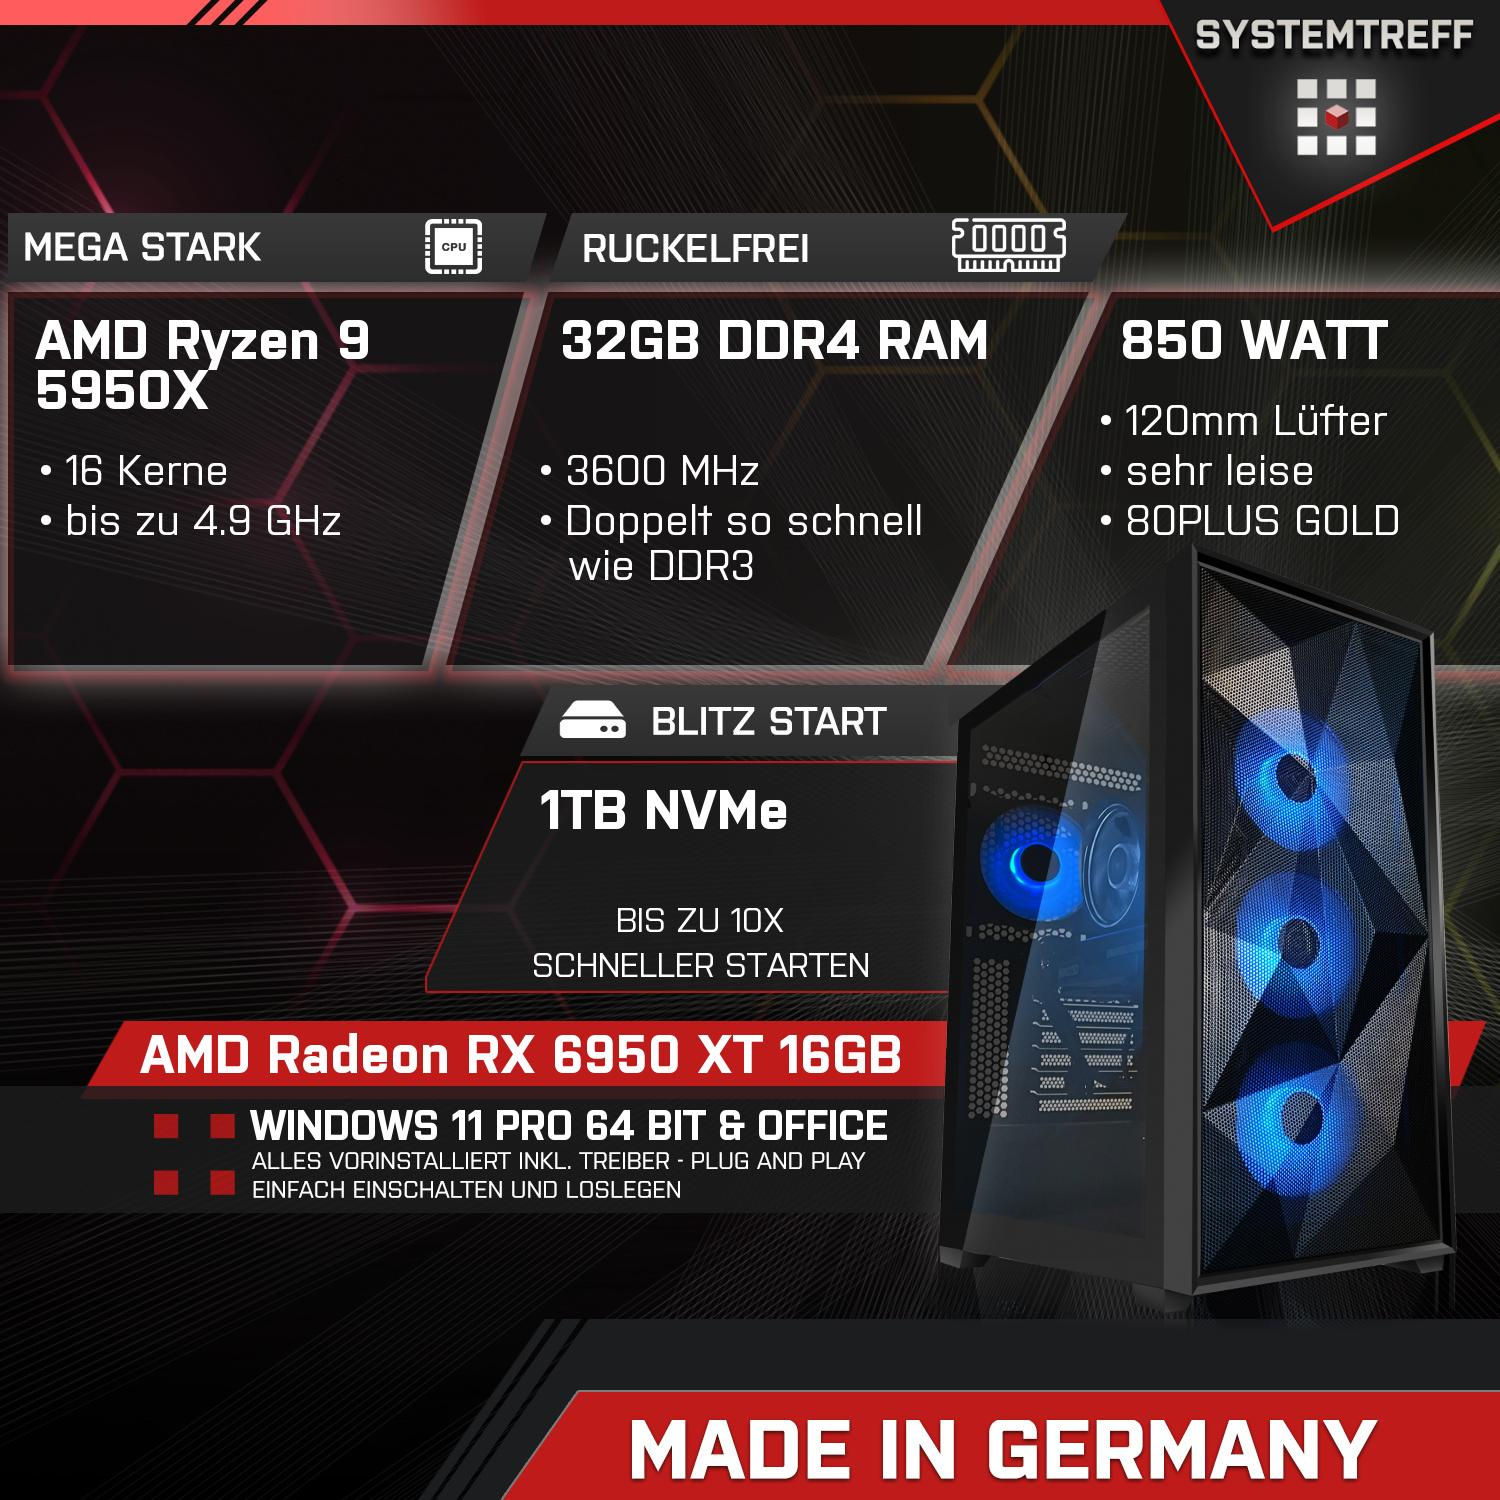 SYSTEMTREFF High-End Gaming AMD Ryzen GB AMD 1000 Pro, XT GB Radeon™ 5950X, Gaming Prozessor, 6950 AMD Ryzen™ RX RAM, 32 11 9 9 Windows PC mSSD, mit